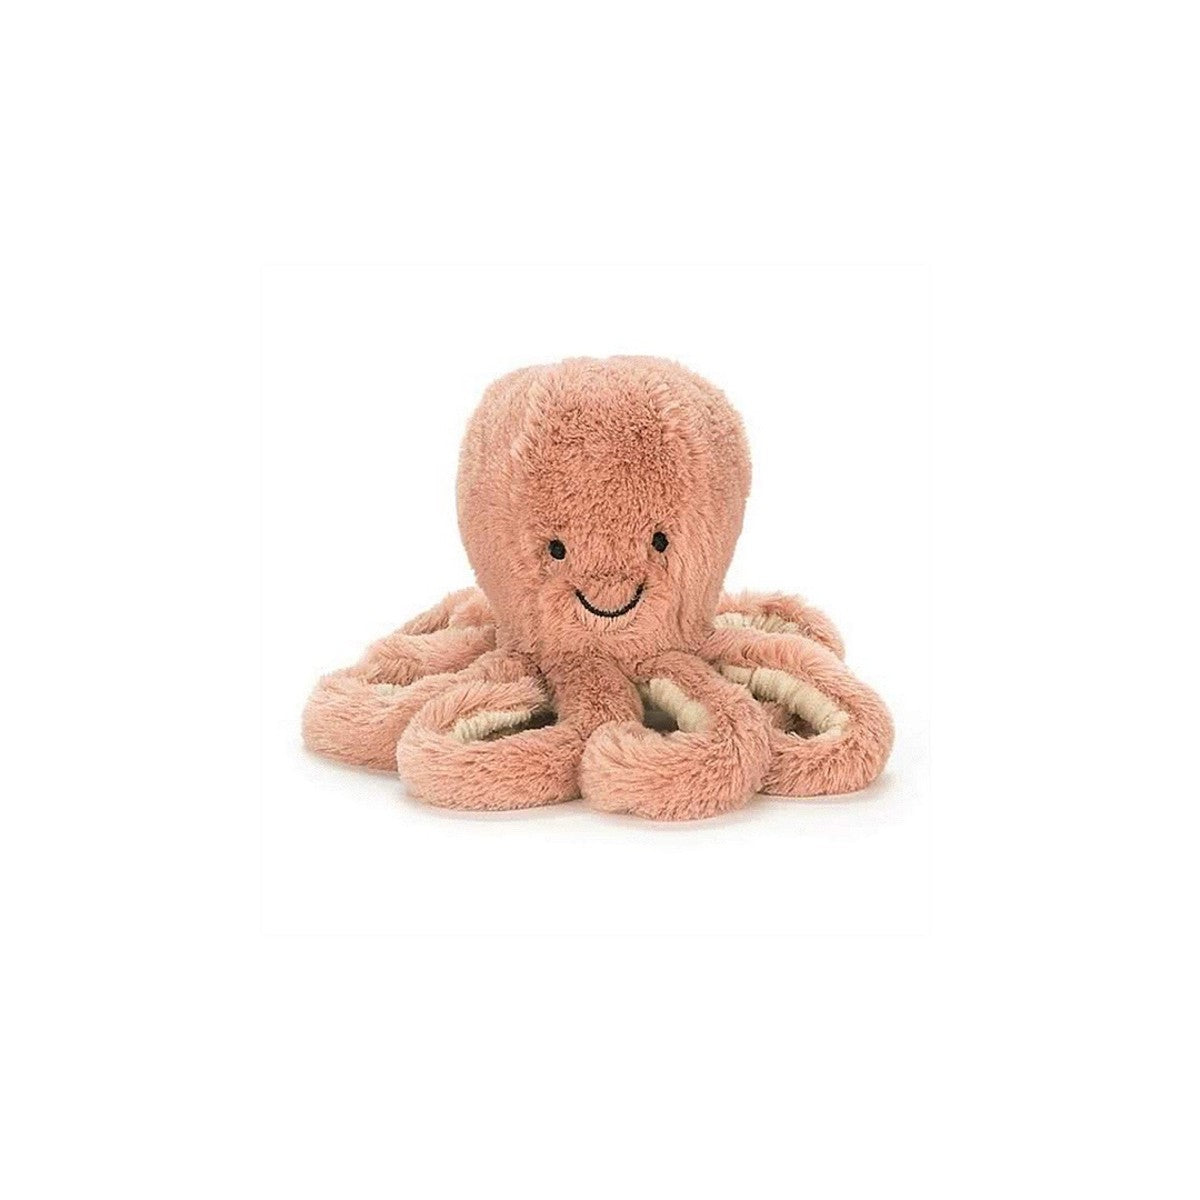 Jellycat Odell Octopus